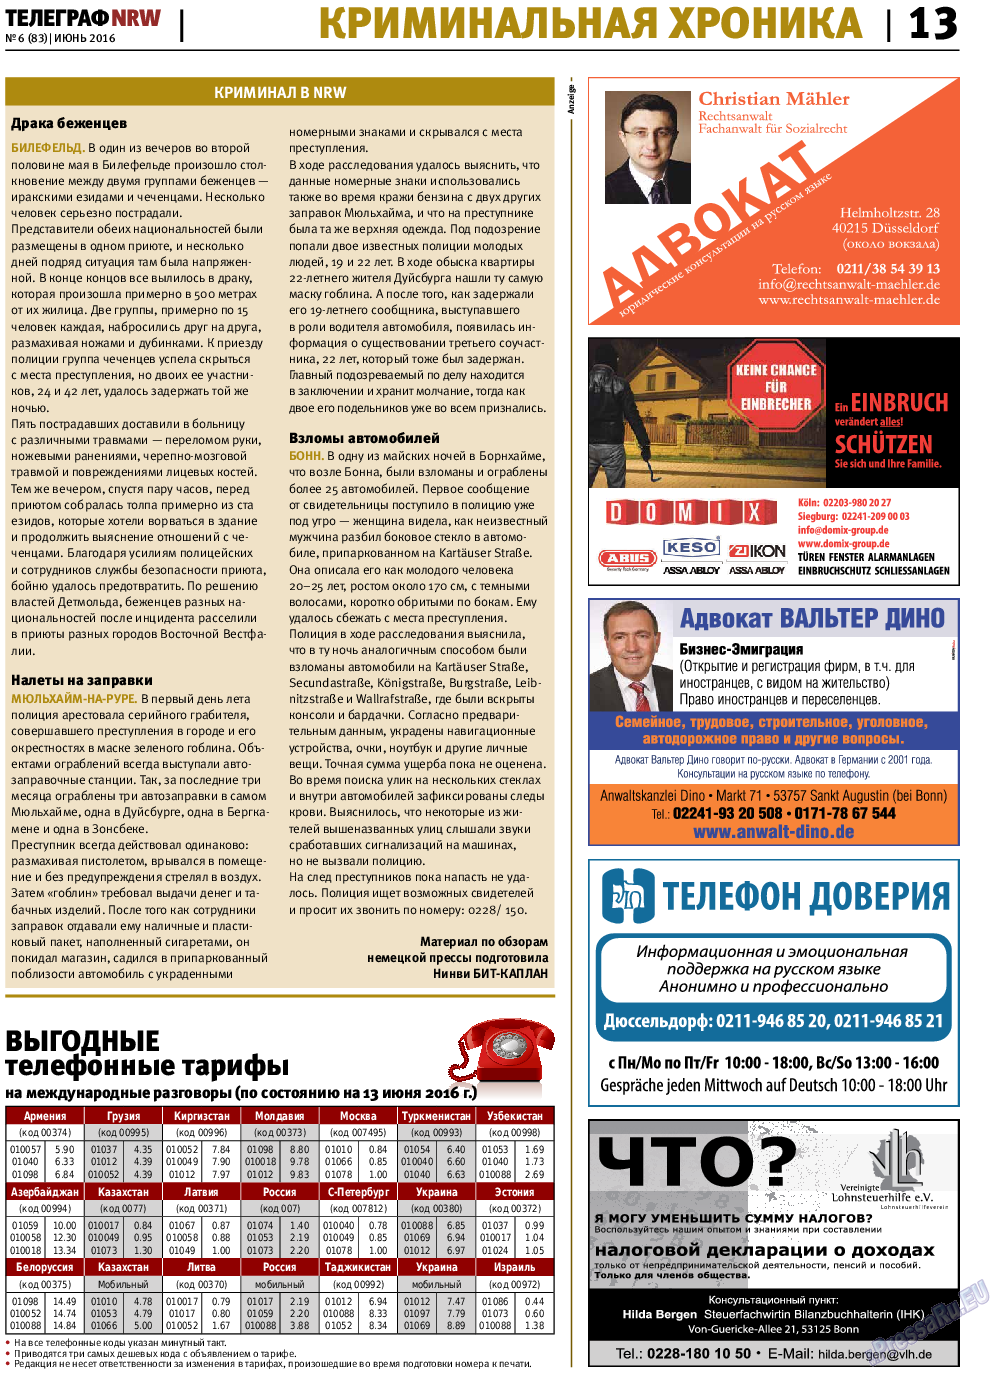 Телеграф NRW, газета. 2016 №6 стр.13